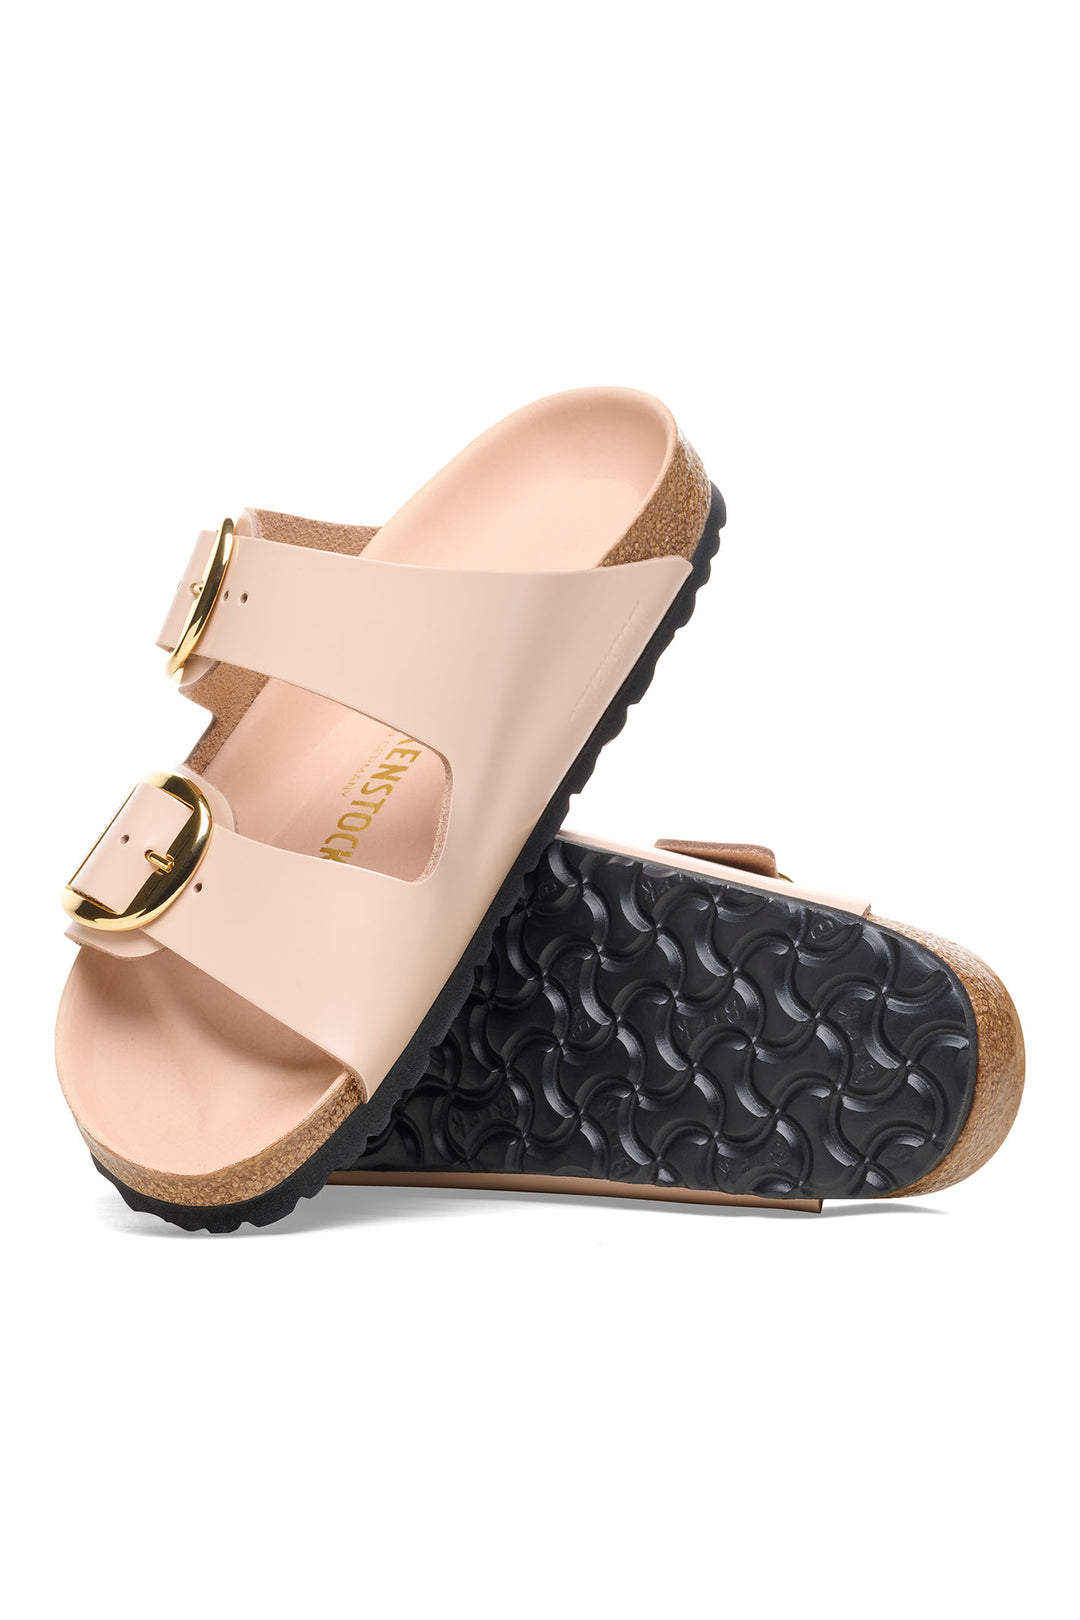 Birkenstock Arizona 1026553 Beige Patent Leather Big Buckle Narrow Fit Sandal - Shirley Allum Boutique